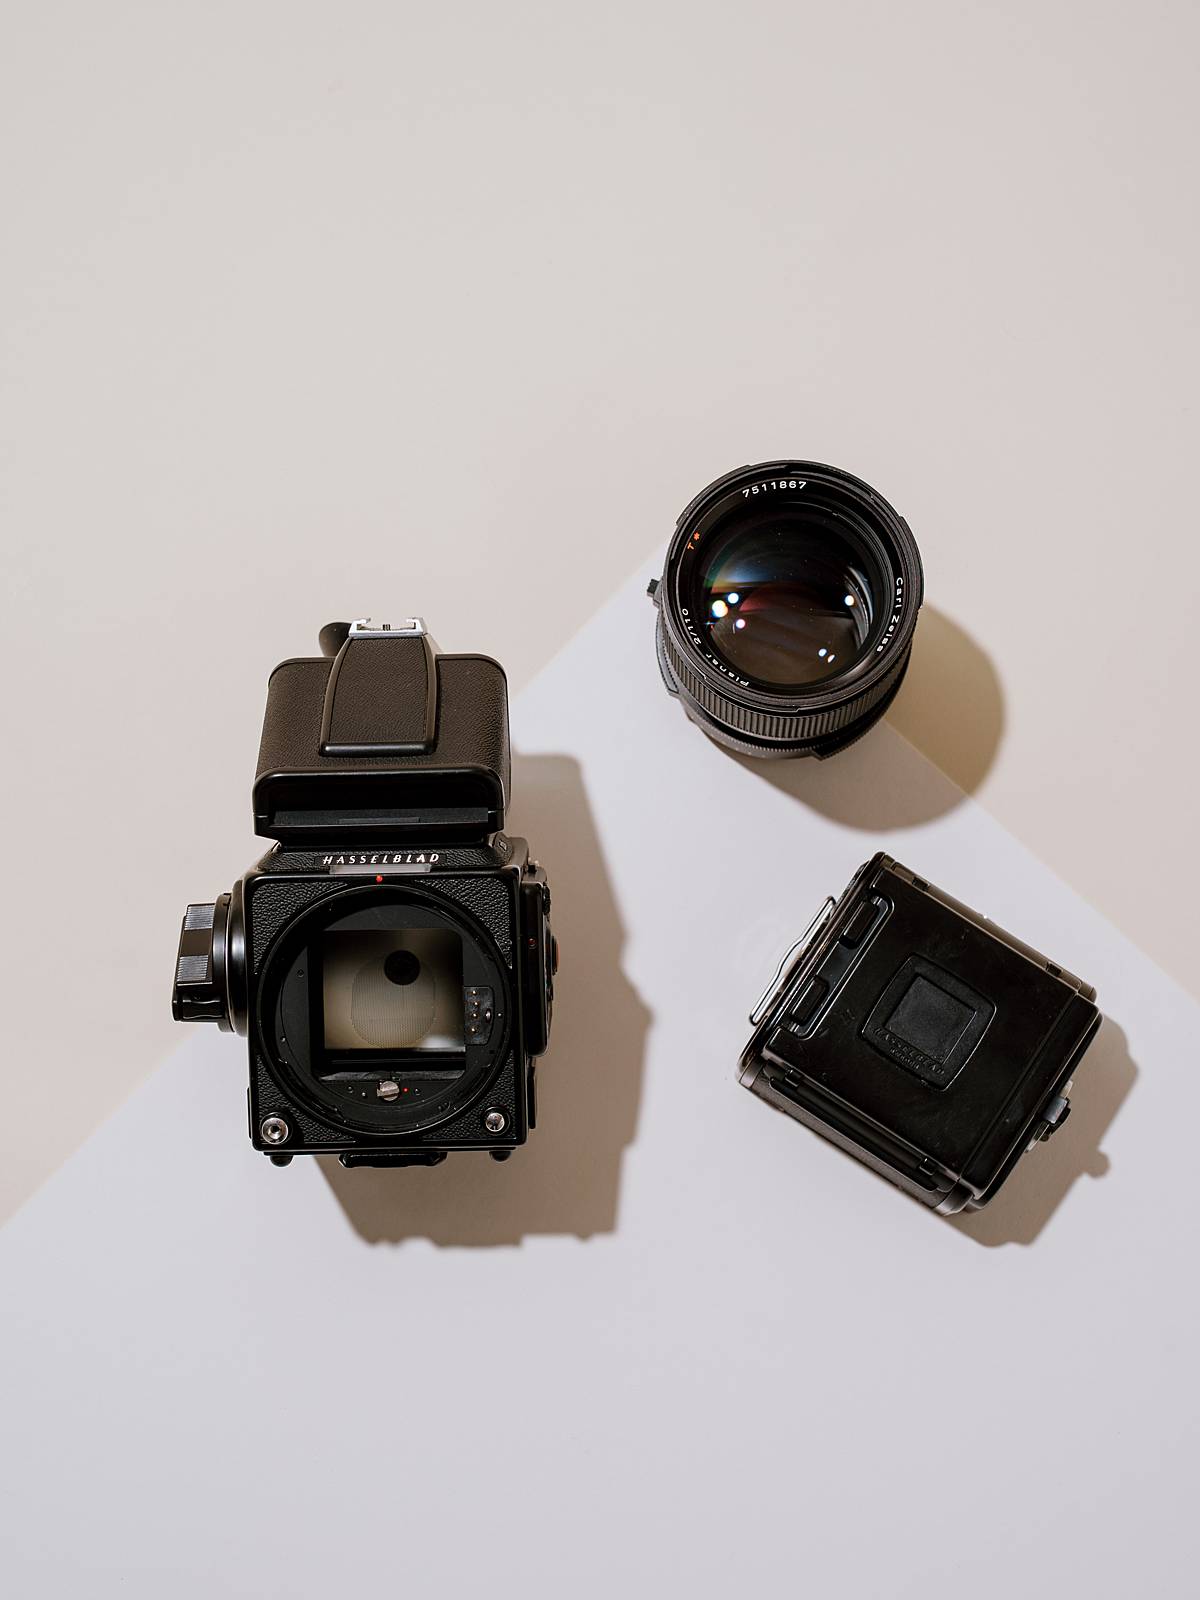 hasselblad 202fa medium format camera system in pieces in studio on tan seamless